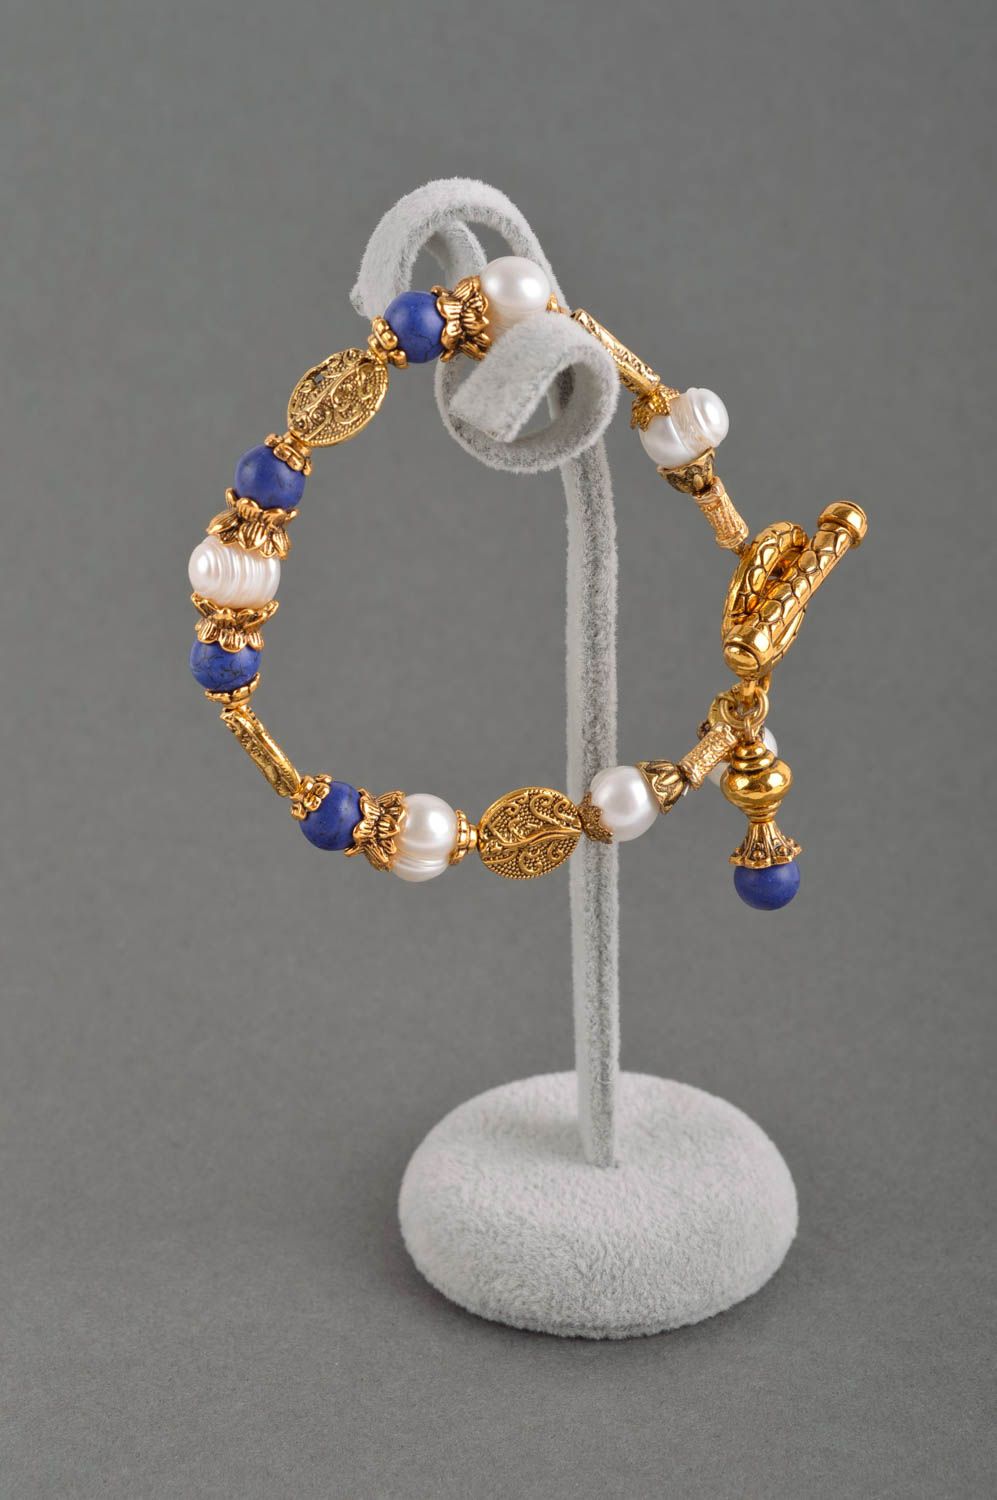 Homemade white and blue beads charm bracelet gemstone jewelry for women photo 1